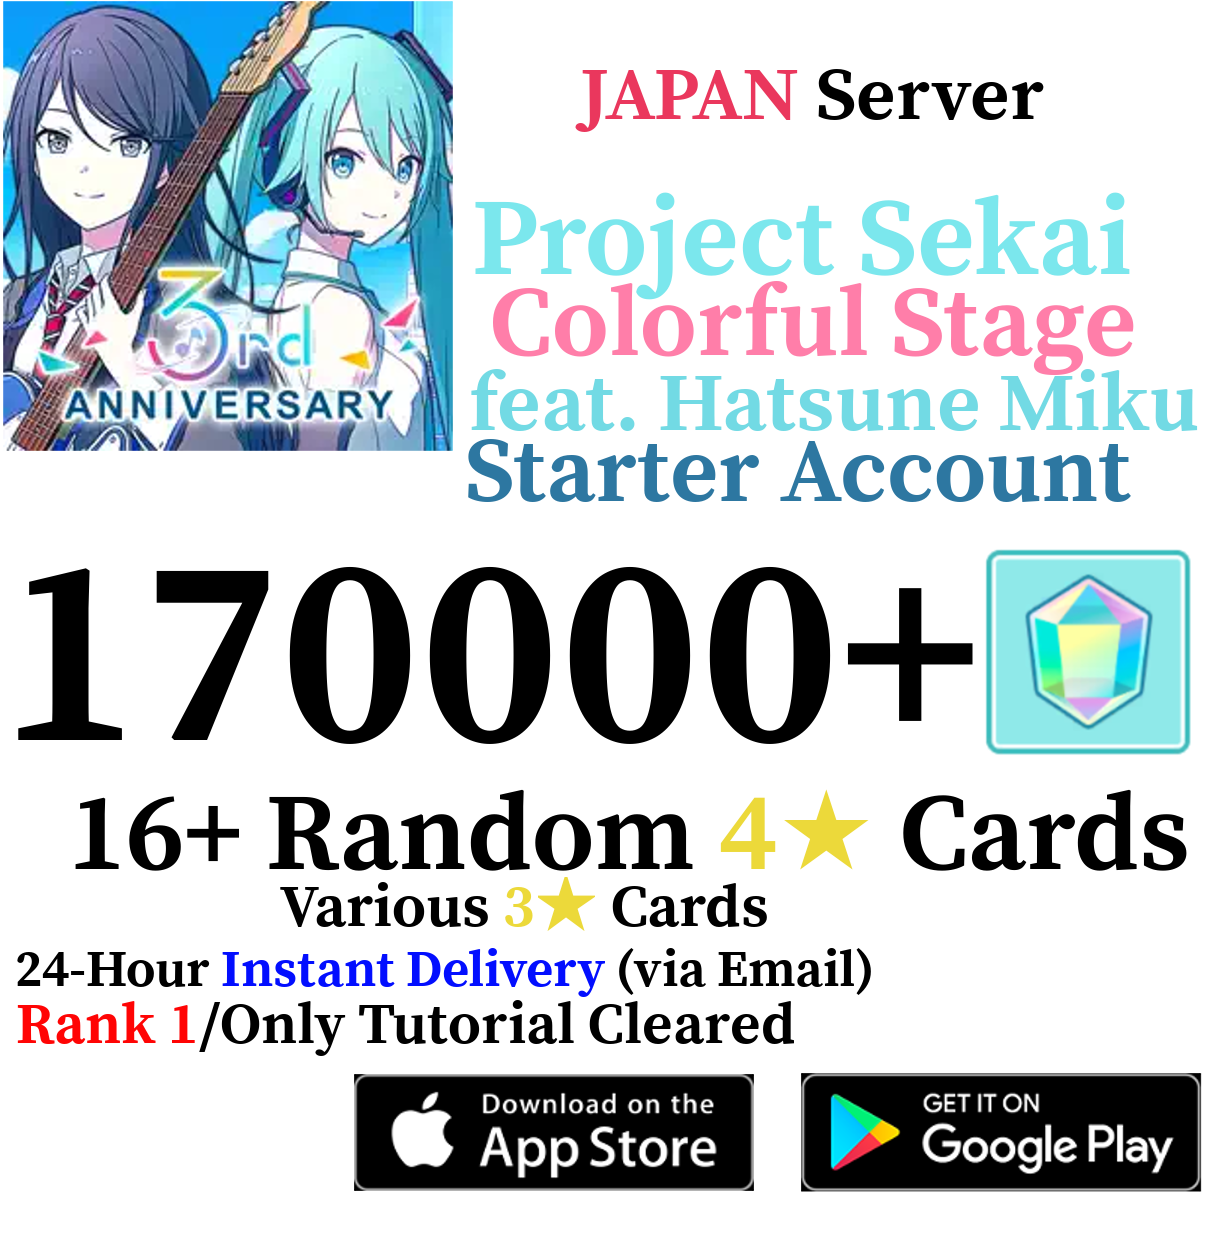 [JP] [INSTANT] 170,000+ Gems Project Sekai Colorful Stage ft. Hatsune Miku PJSekai Starter Account